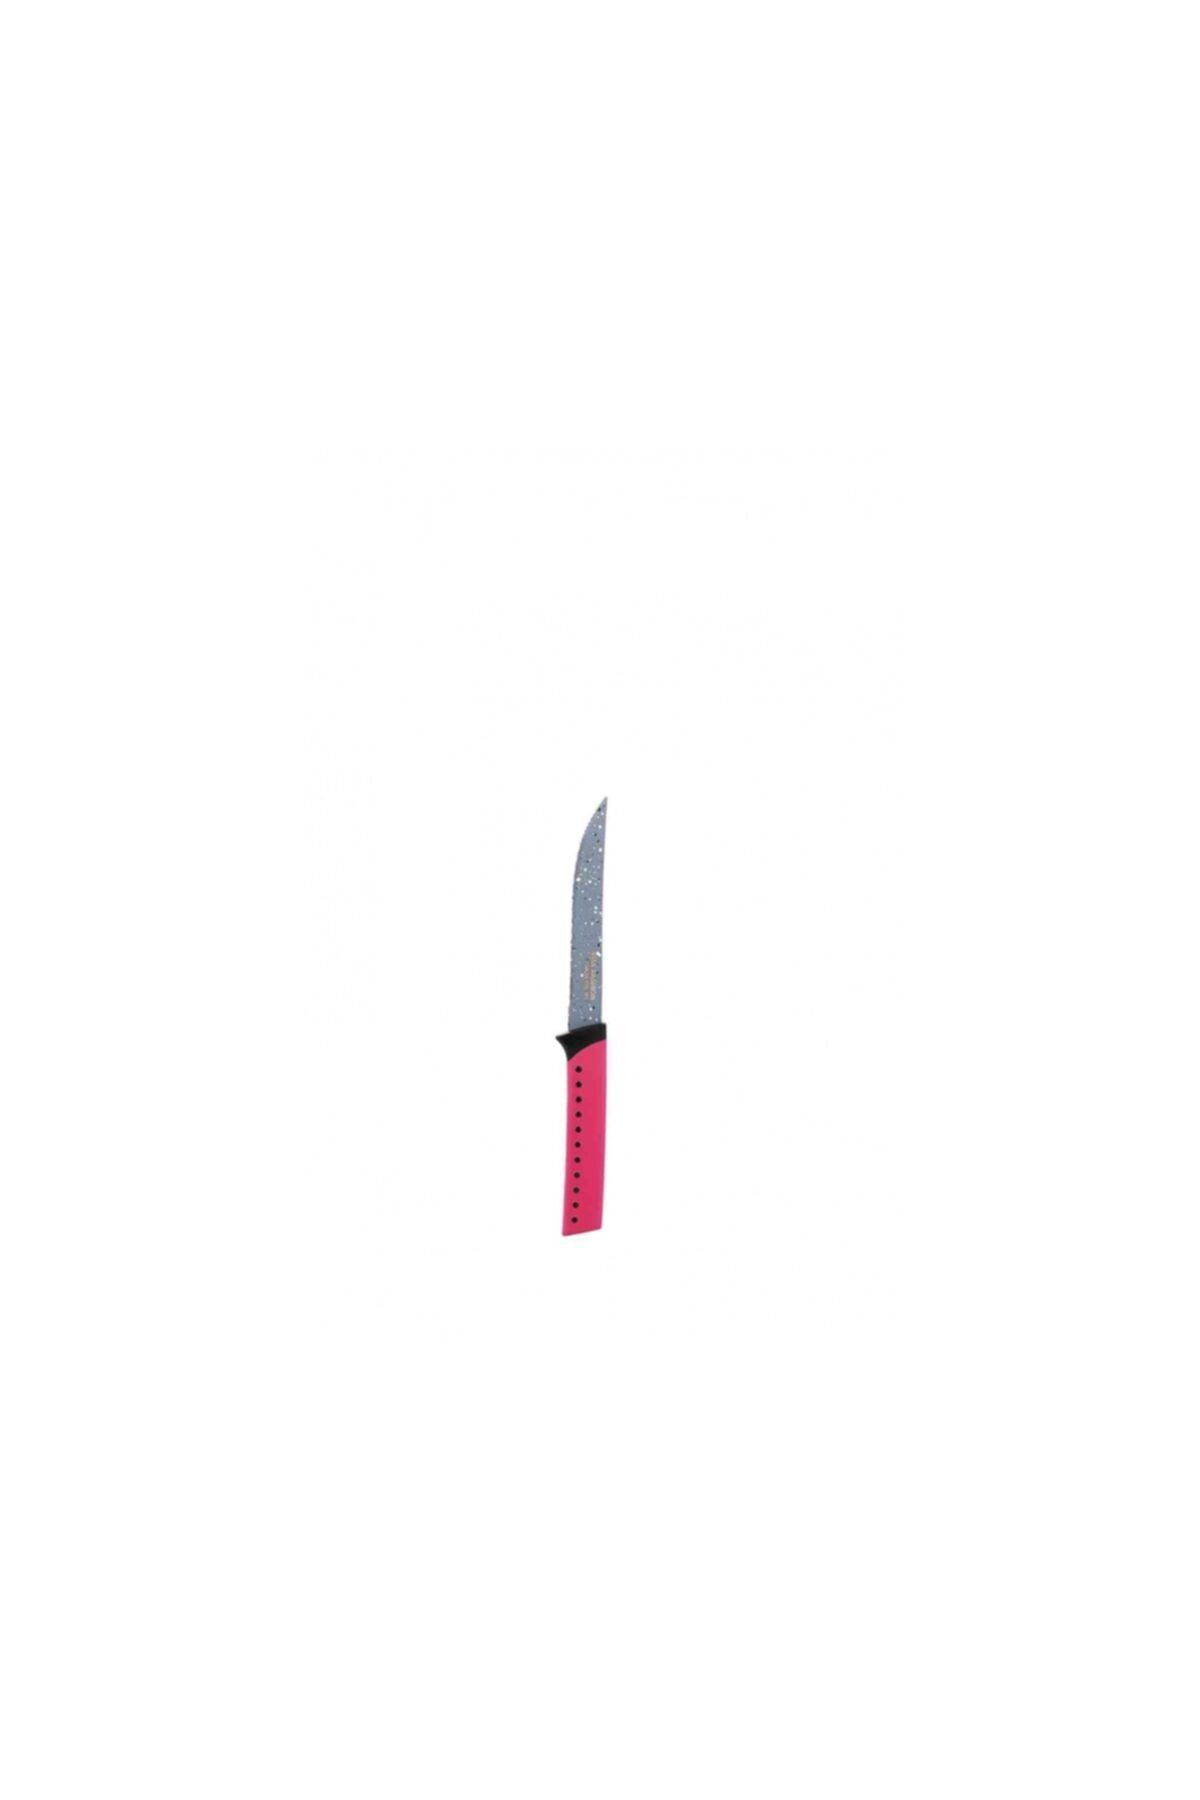 Taç 21 Cm Sebze Bıçağı Fuşya